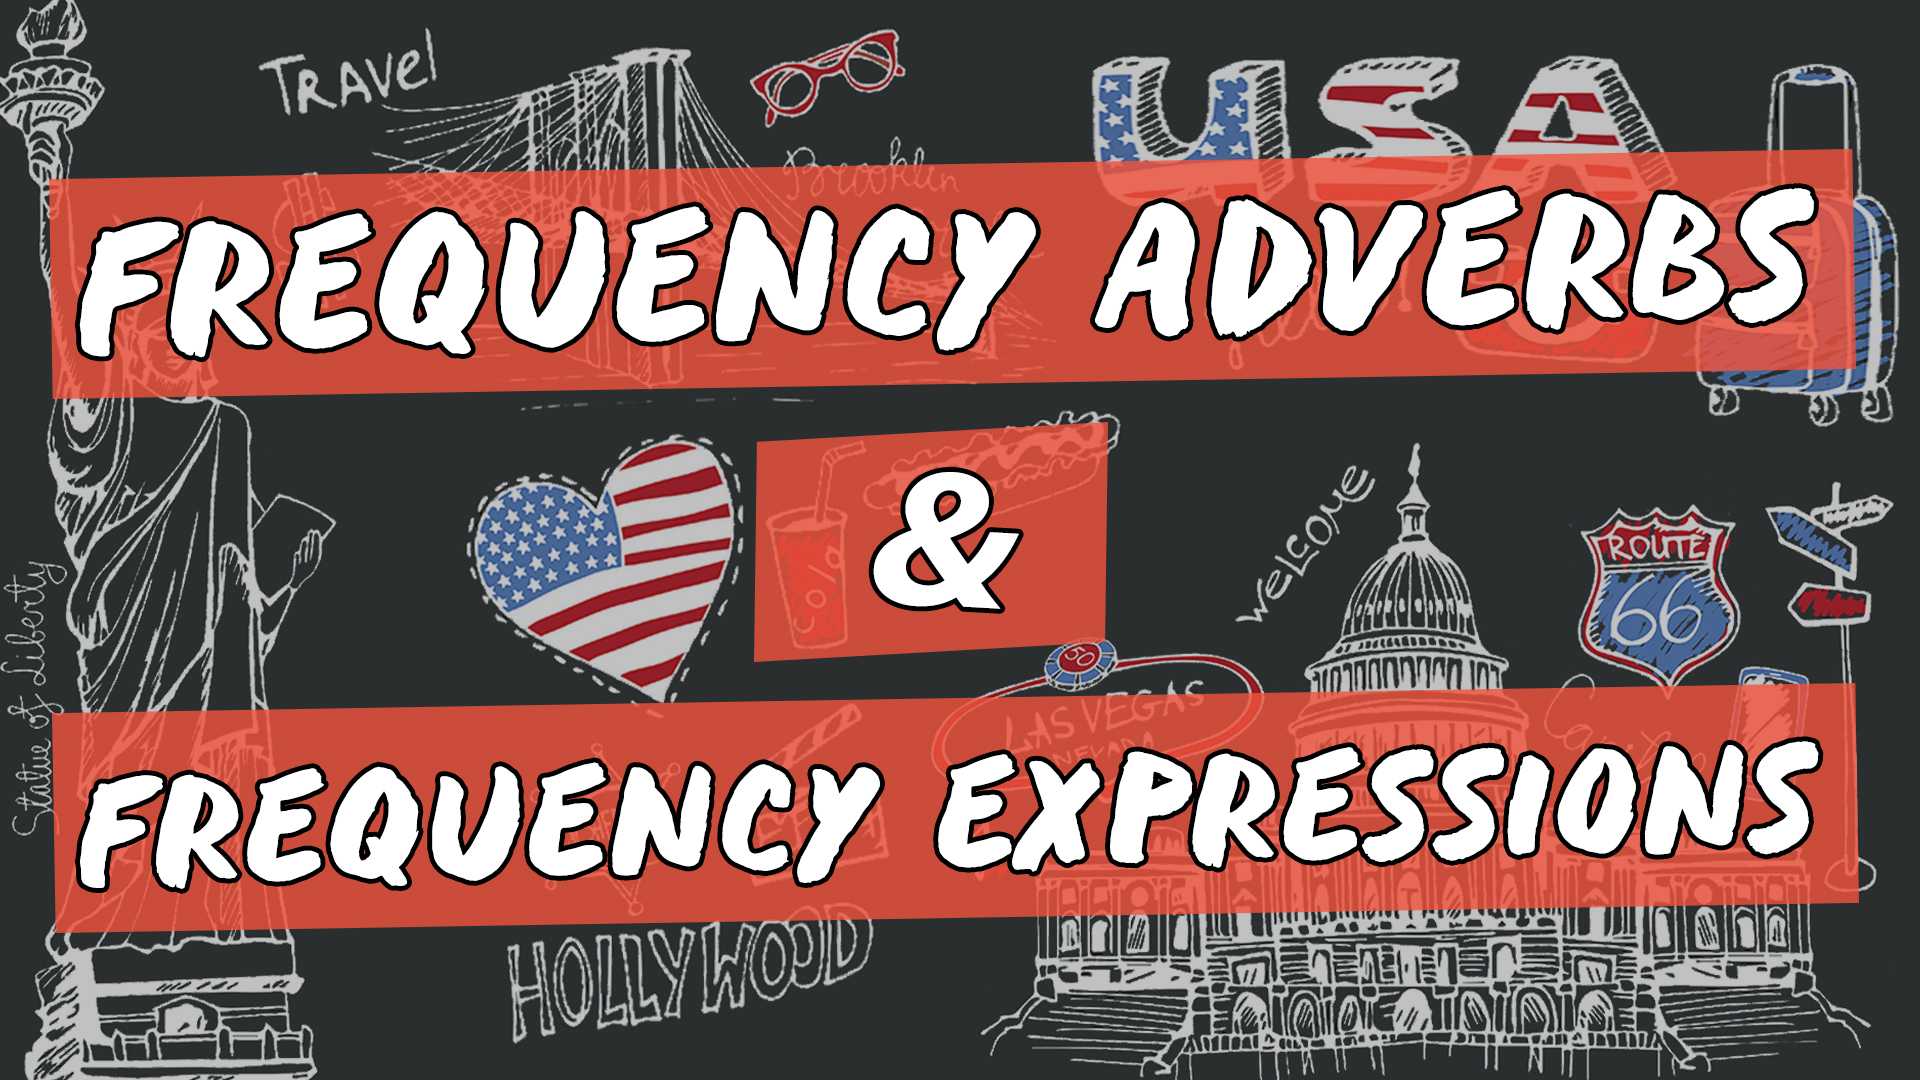 "Frequency Adverbs & Frequency Expressions" escrito sobre ilustração de diversos símbolos estadunidenses